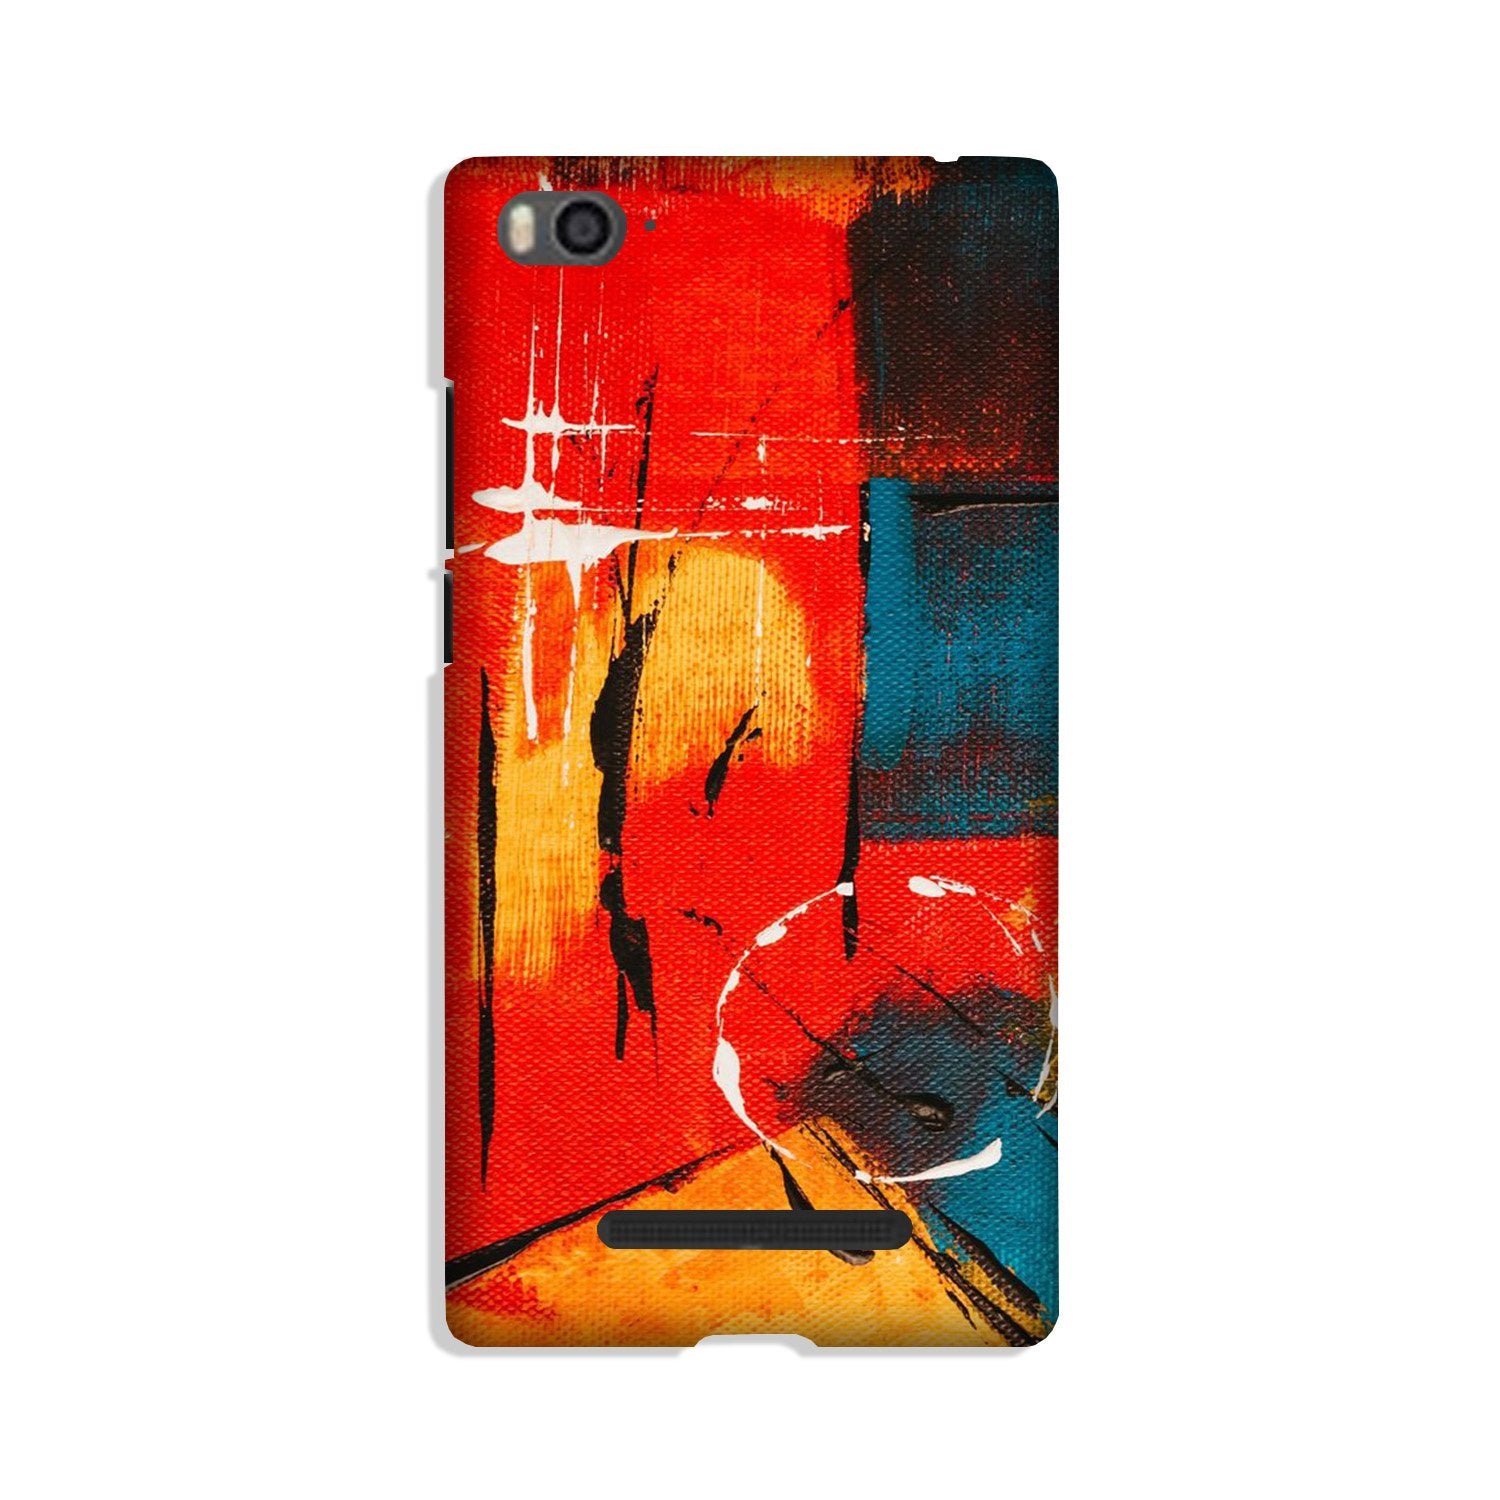 Modern Art Case for Xiaomi Redmi 5A (Design No. 239)